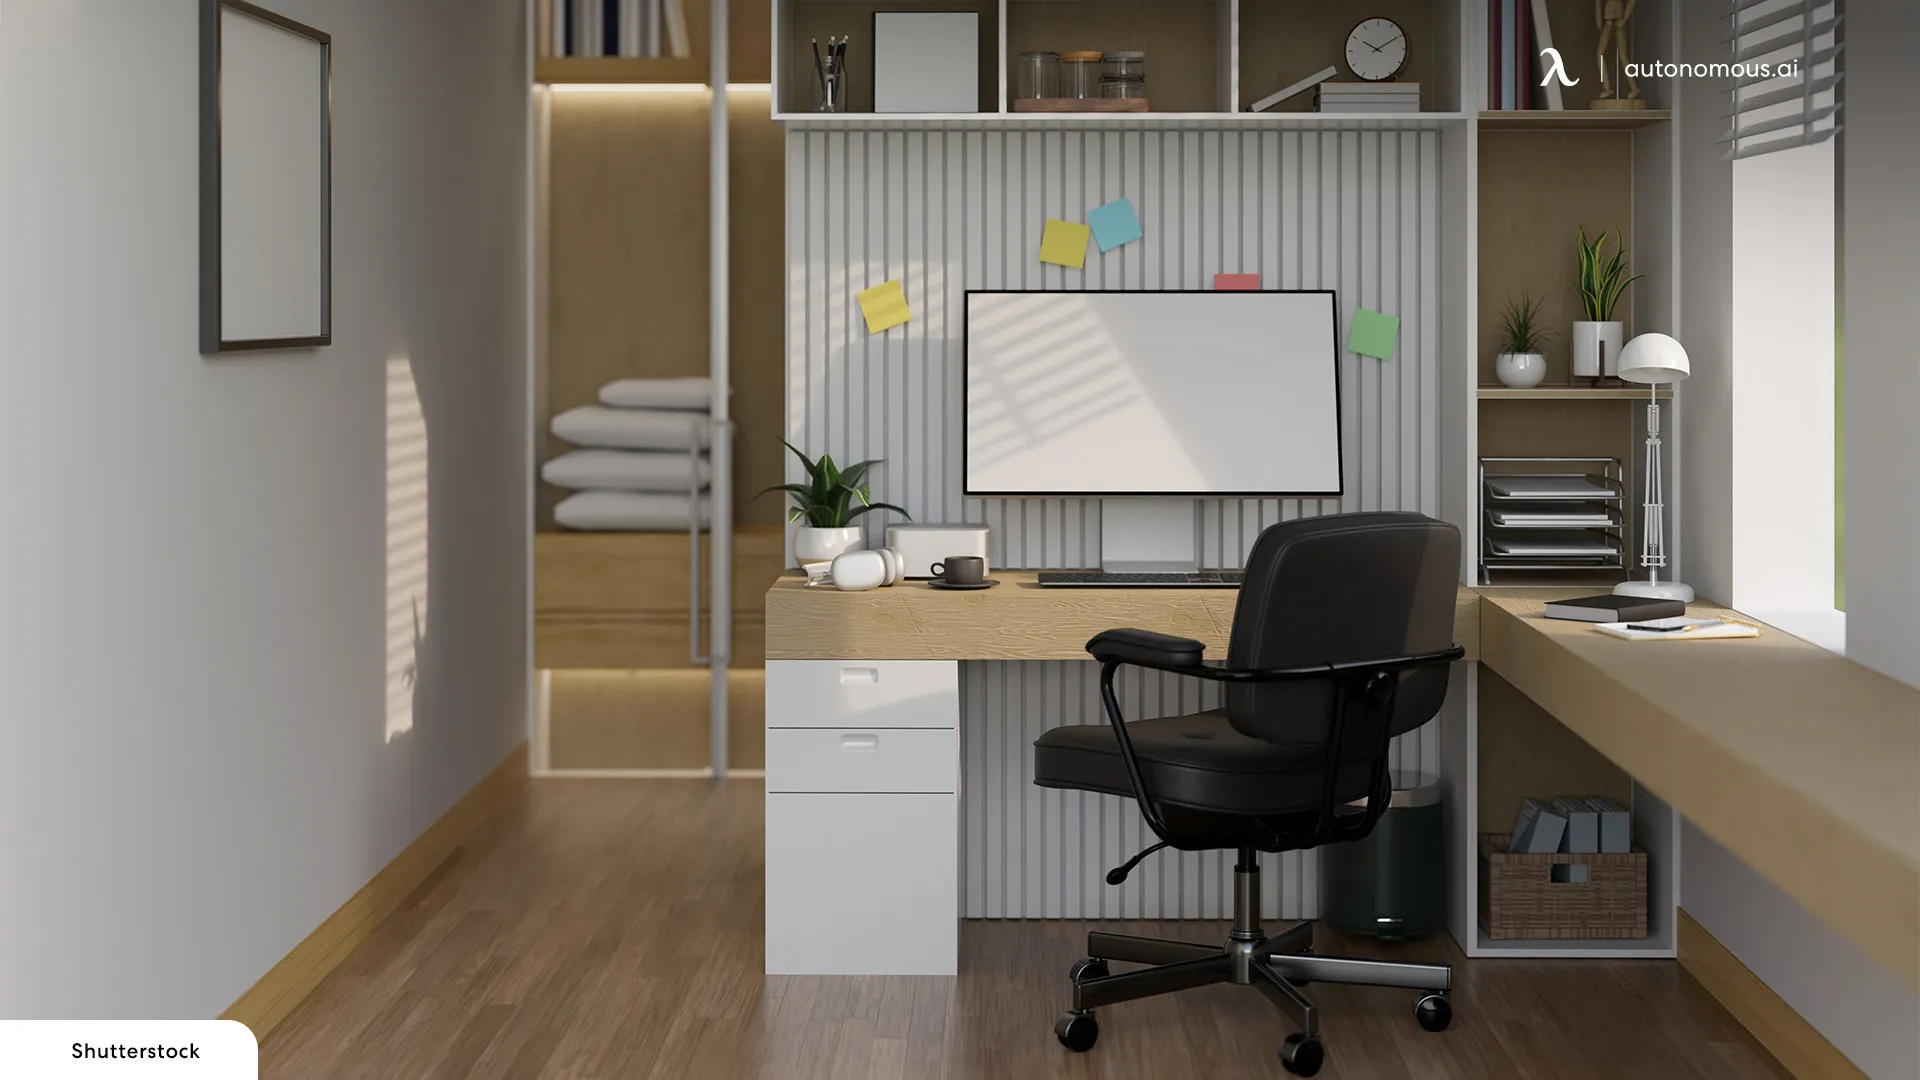 Built-in Wall Desk with Shelves - built in desk ideas